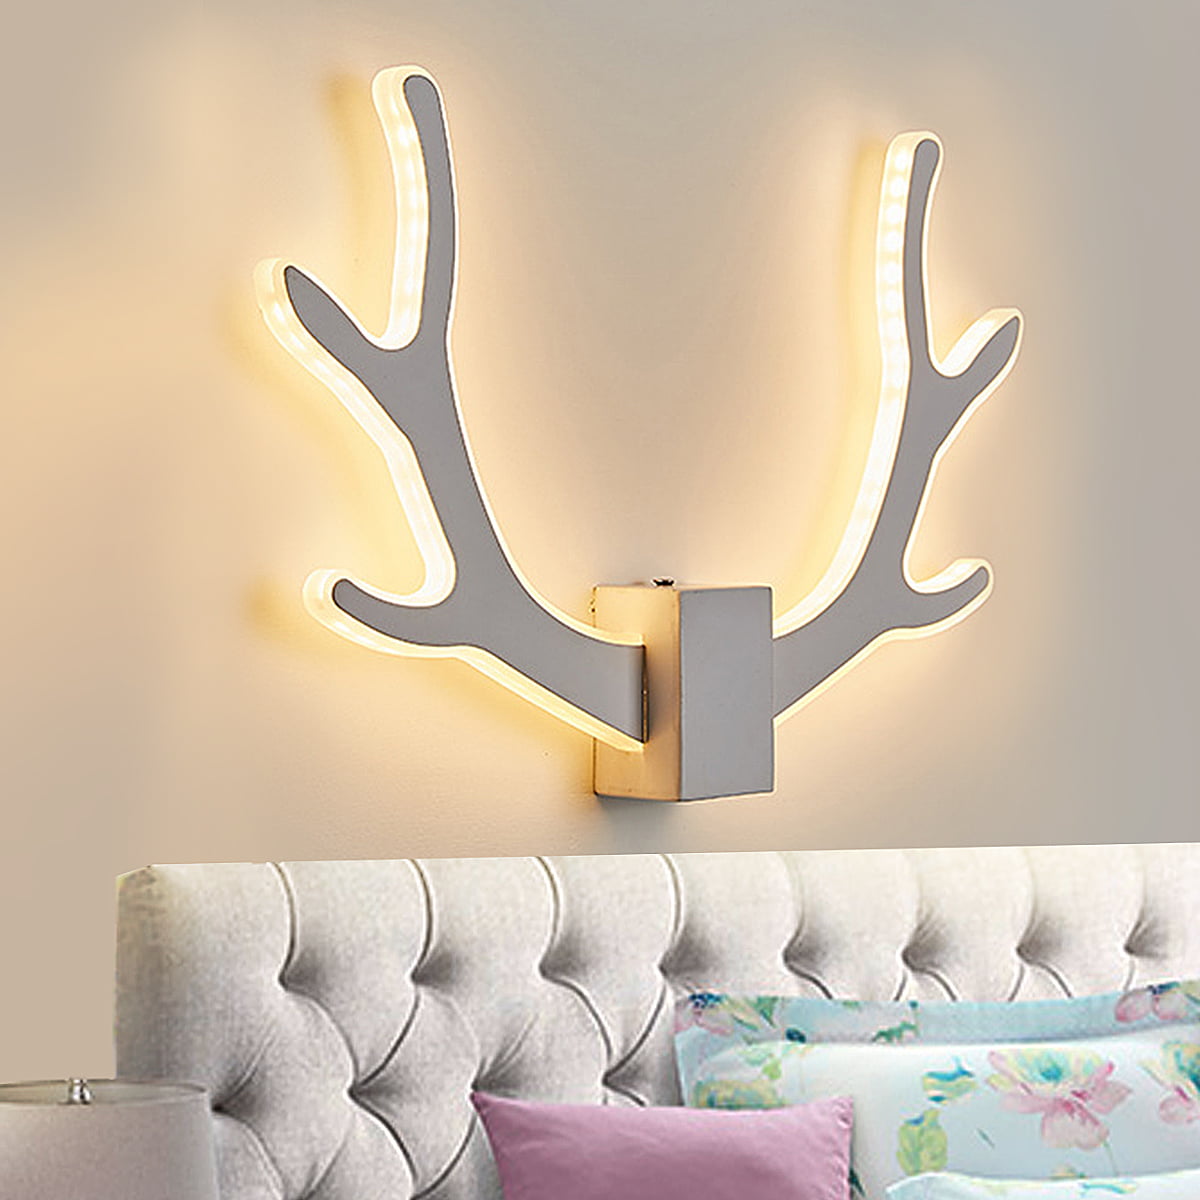 Modren Super Bright LED Acrylic Bar Light Corridor Bedside Wall Sconces Lamp 